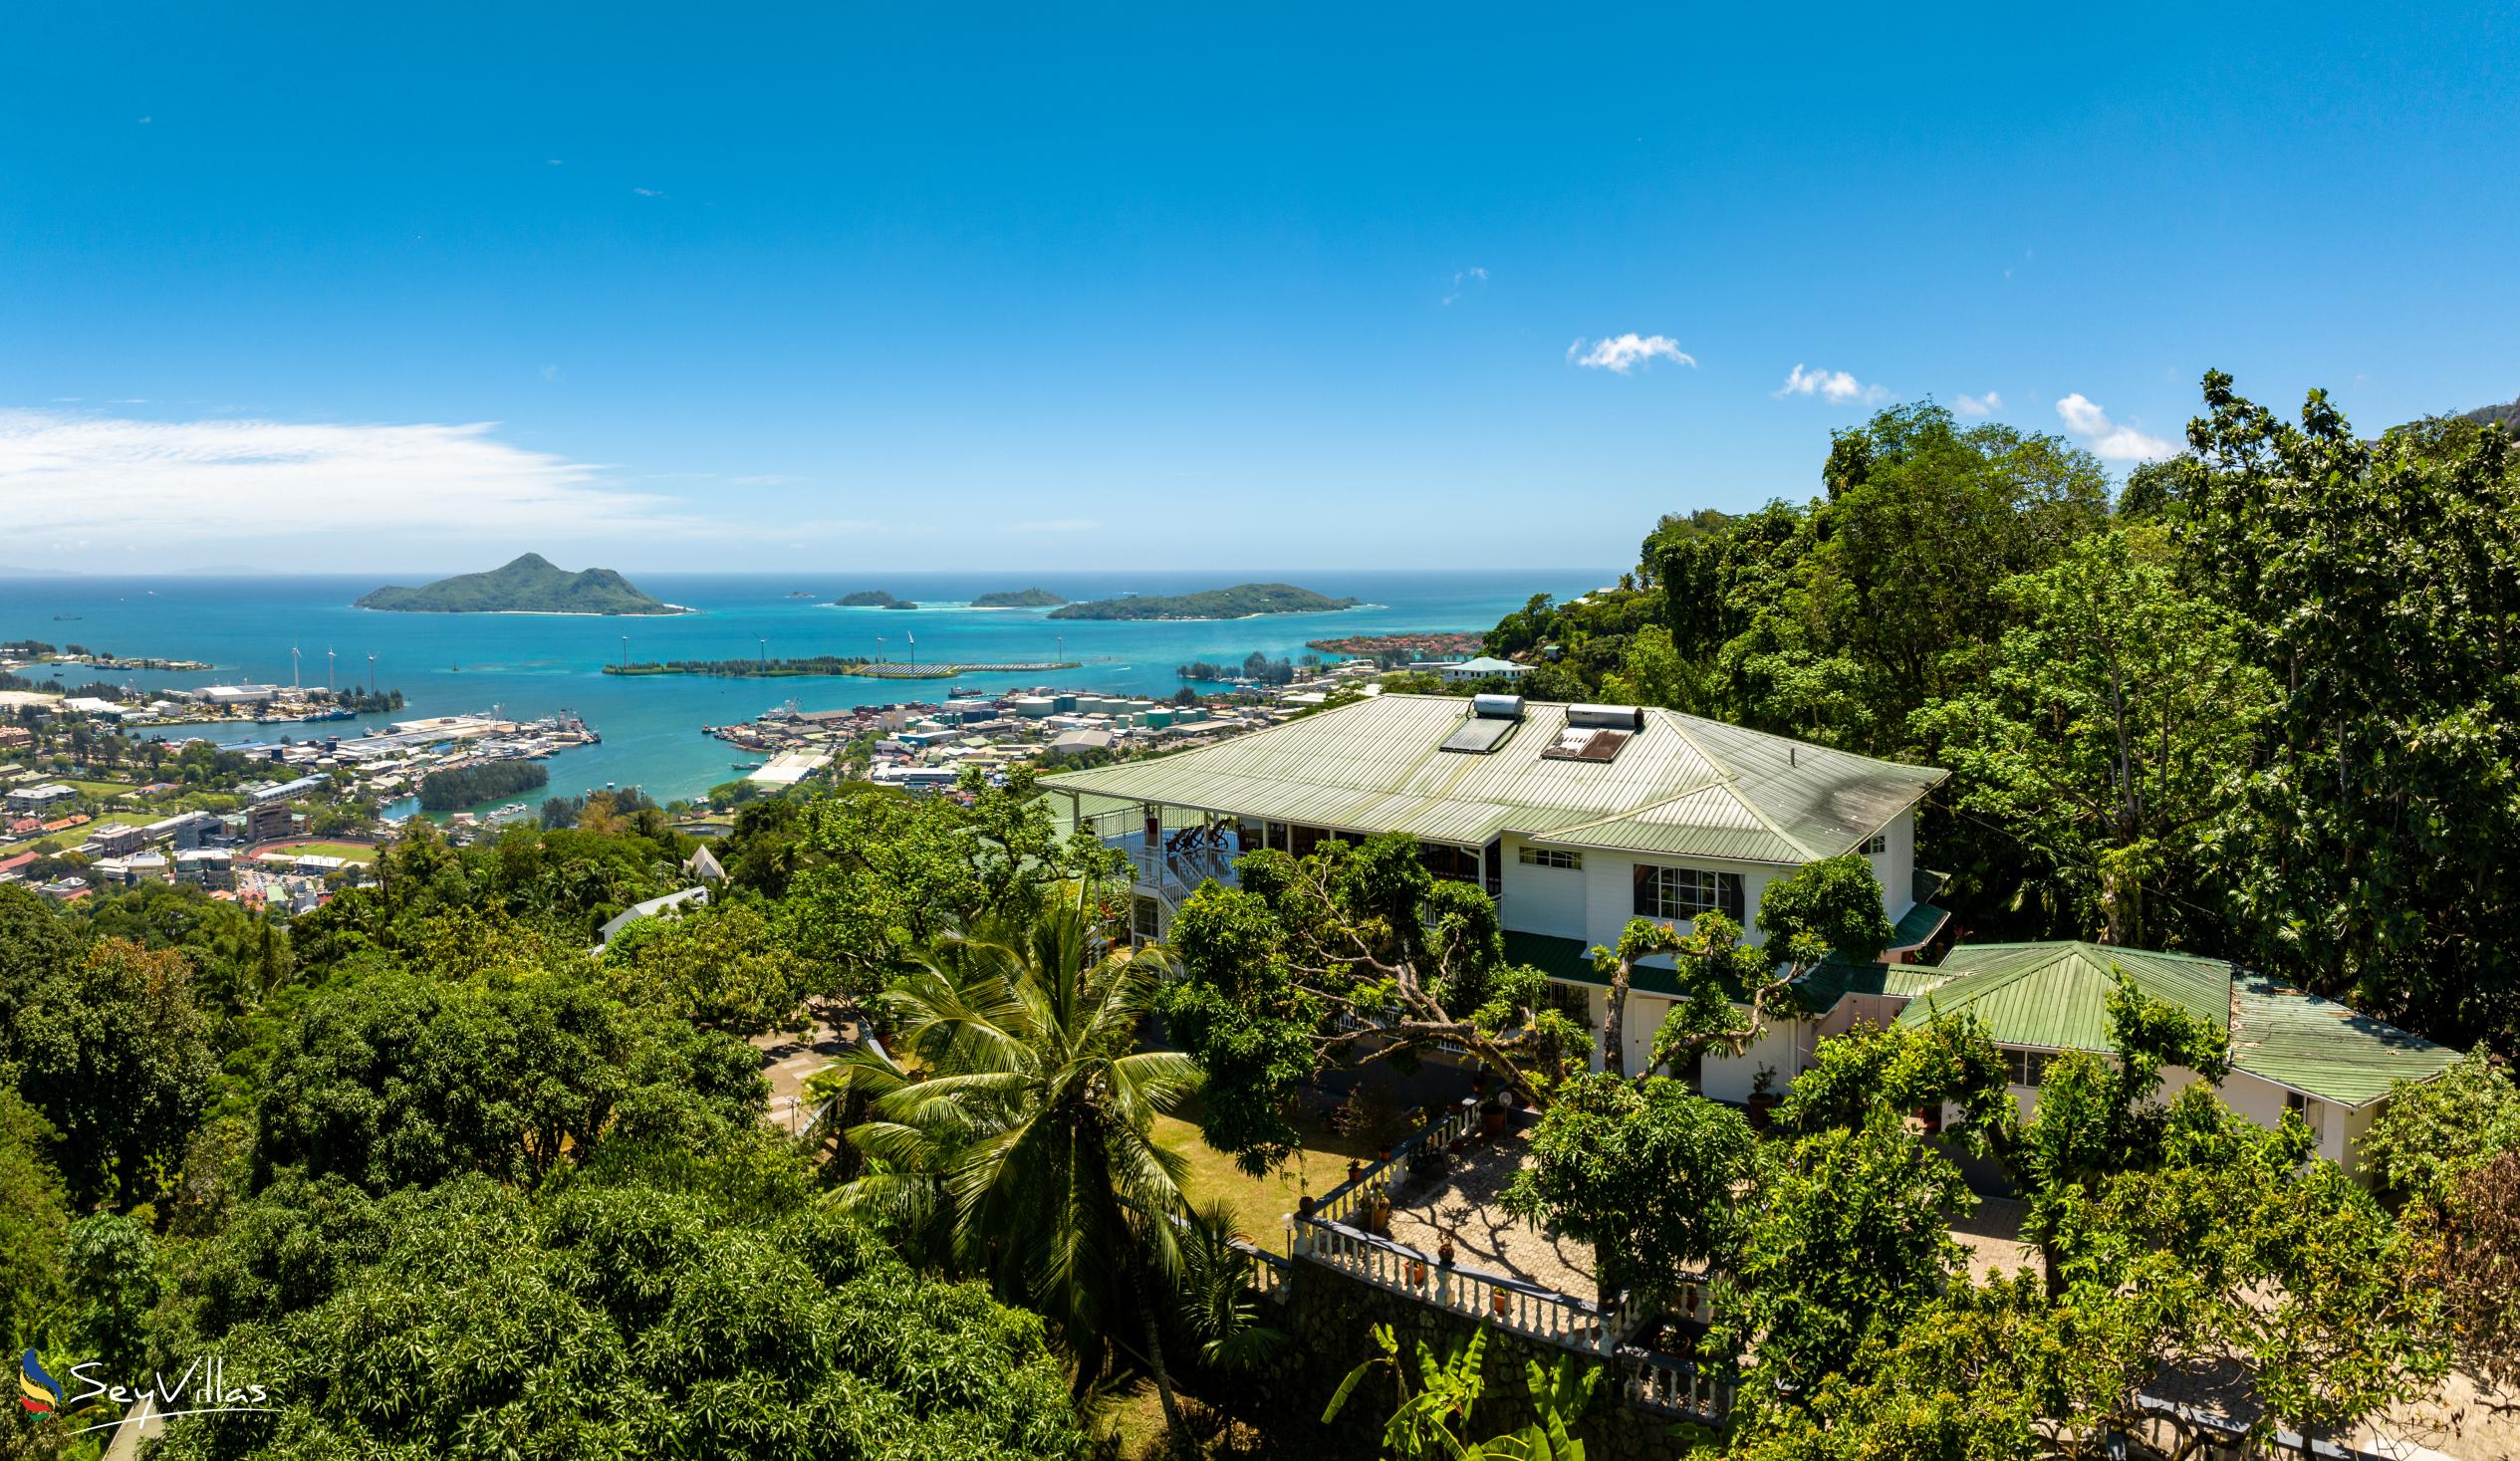 Photo 1: Beau Sejour Hotel - Outdoor area - Mahé (Seychelles)